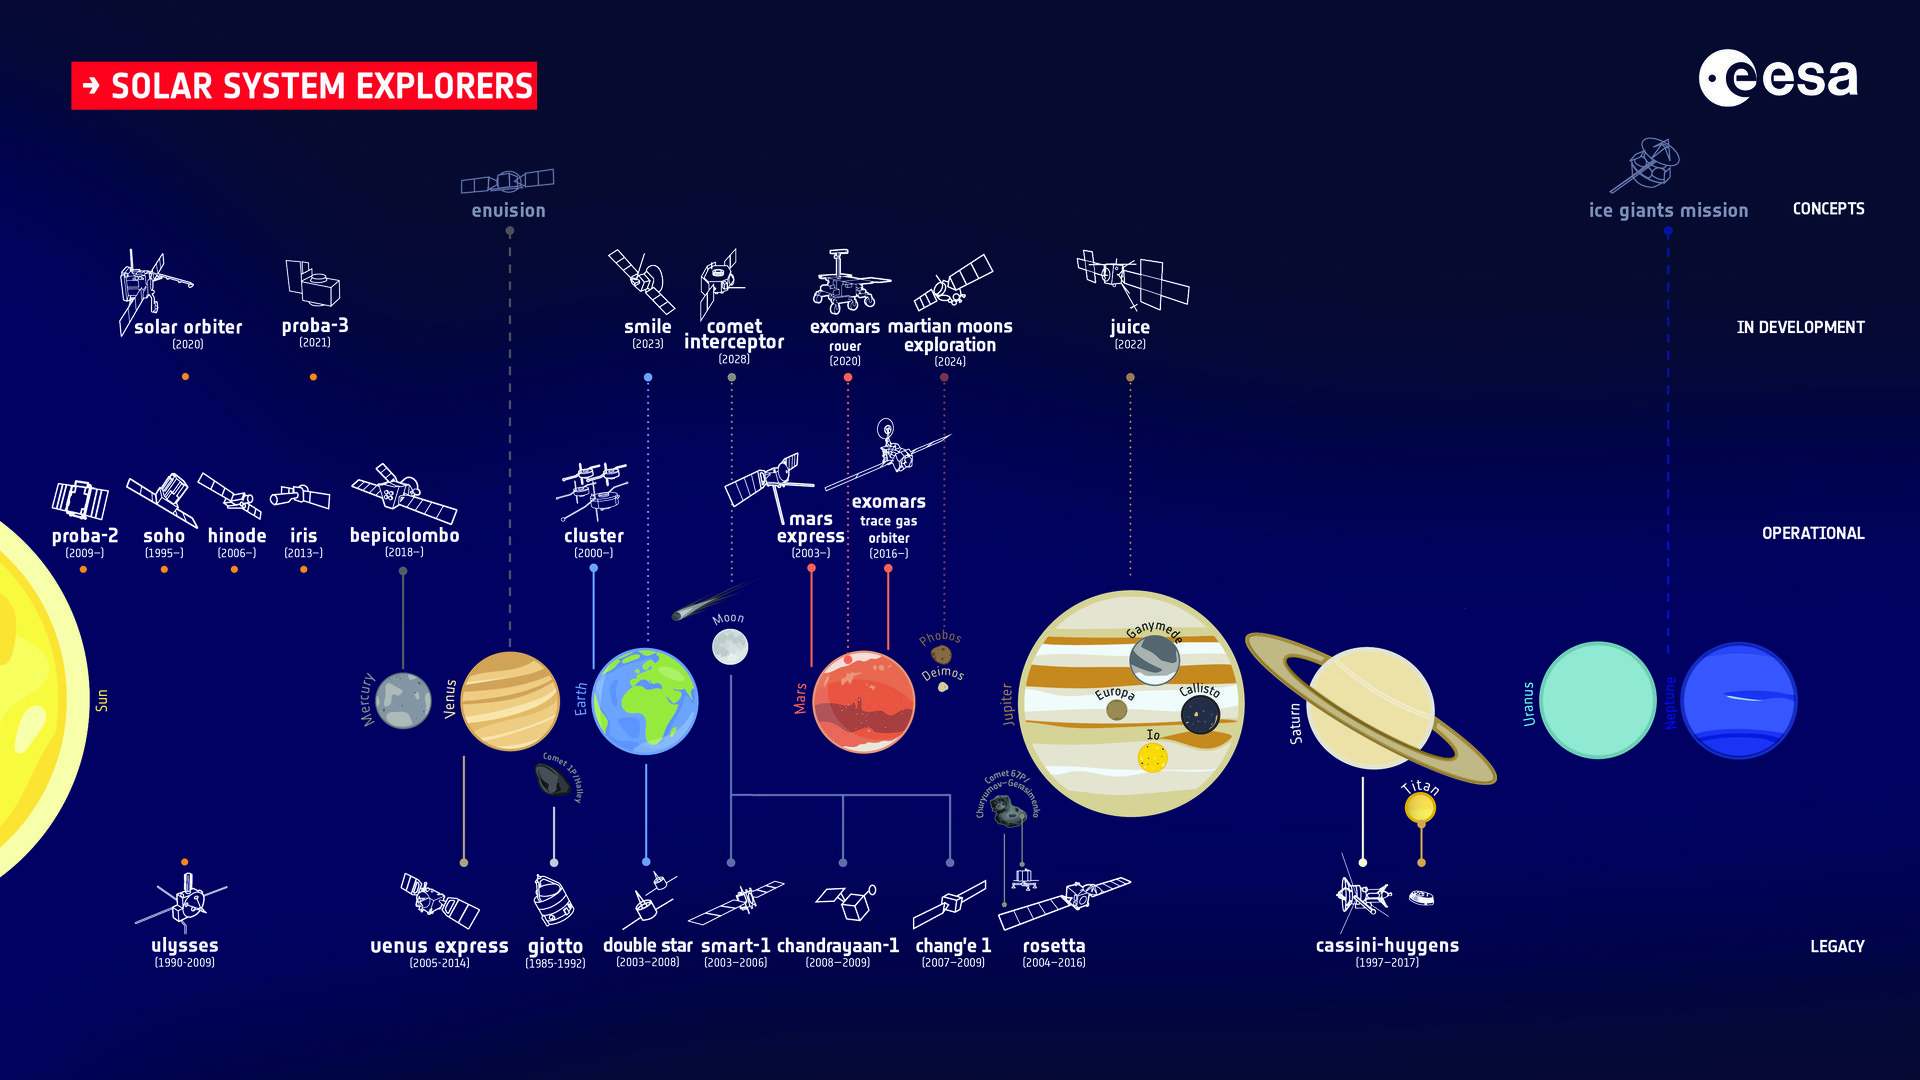 Esa S Fleet Of Solar System Explorers